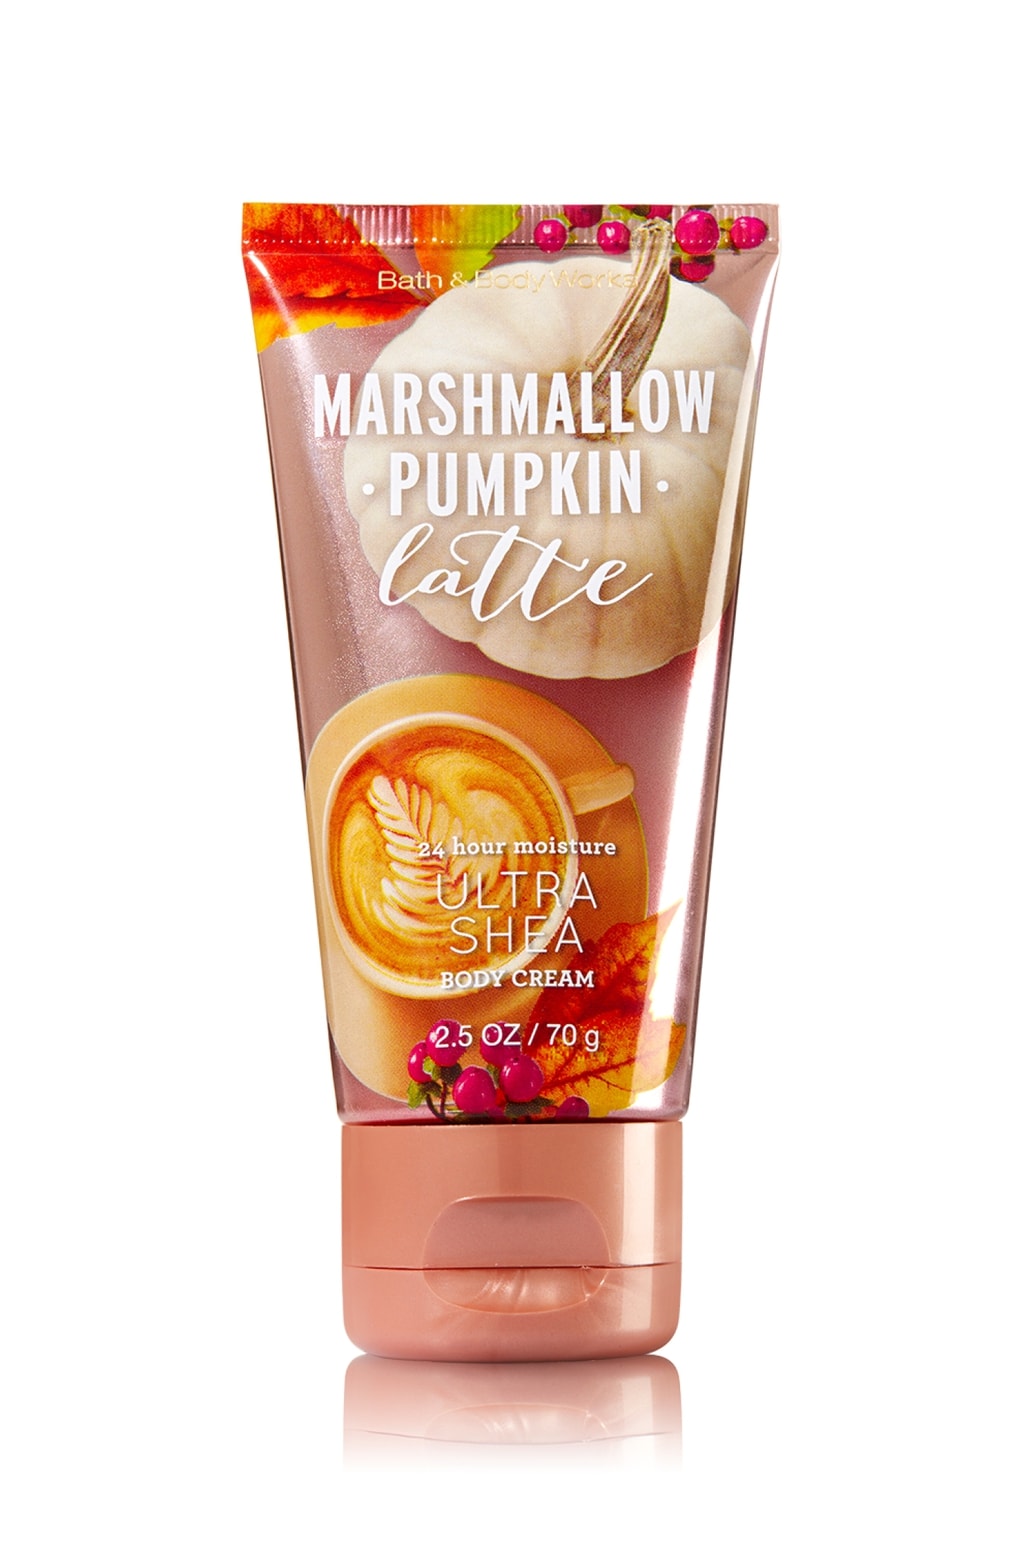 Marshmallow pumpkin latte body cream